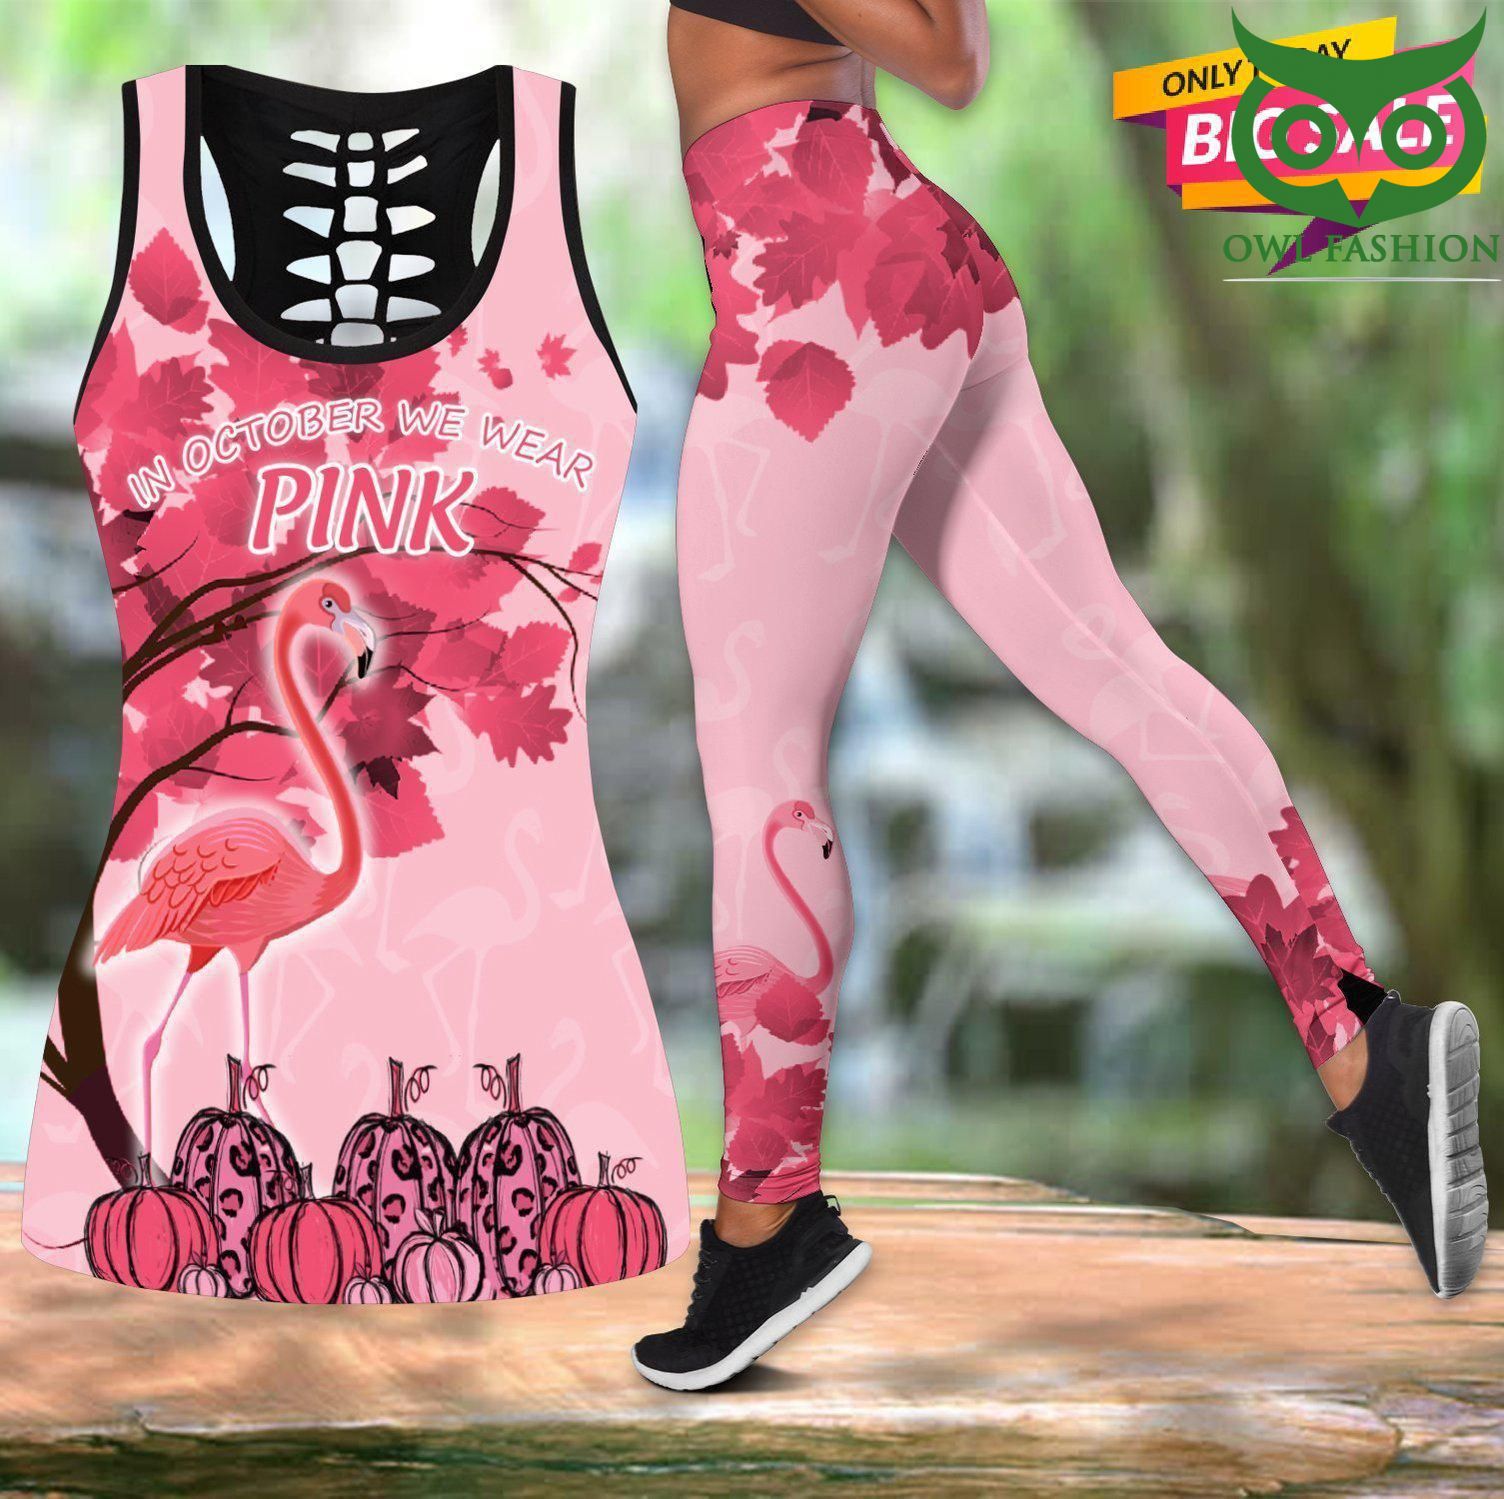 Yoga Love Peace In October we wear pink flamingo Tank Top